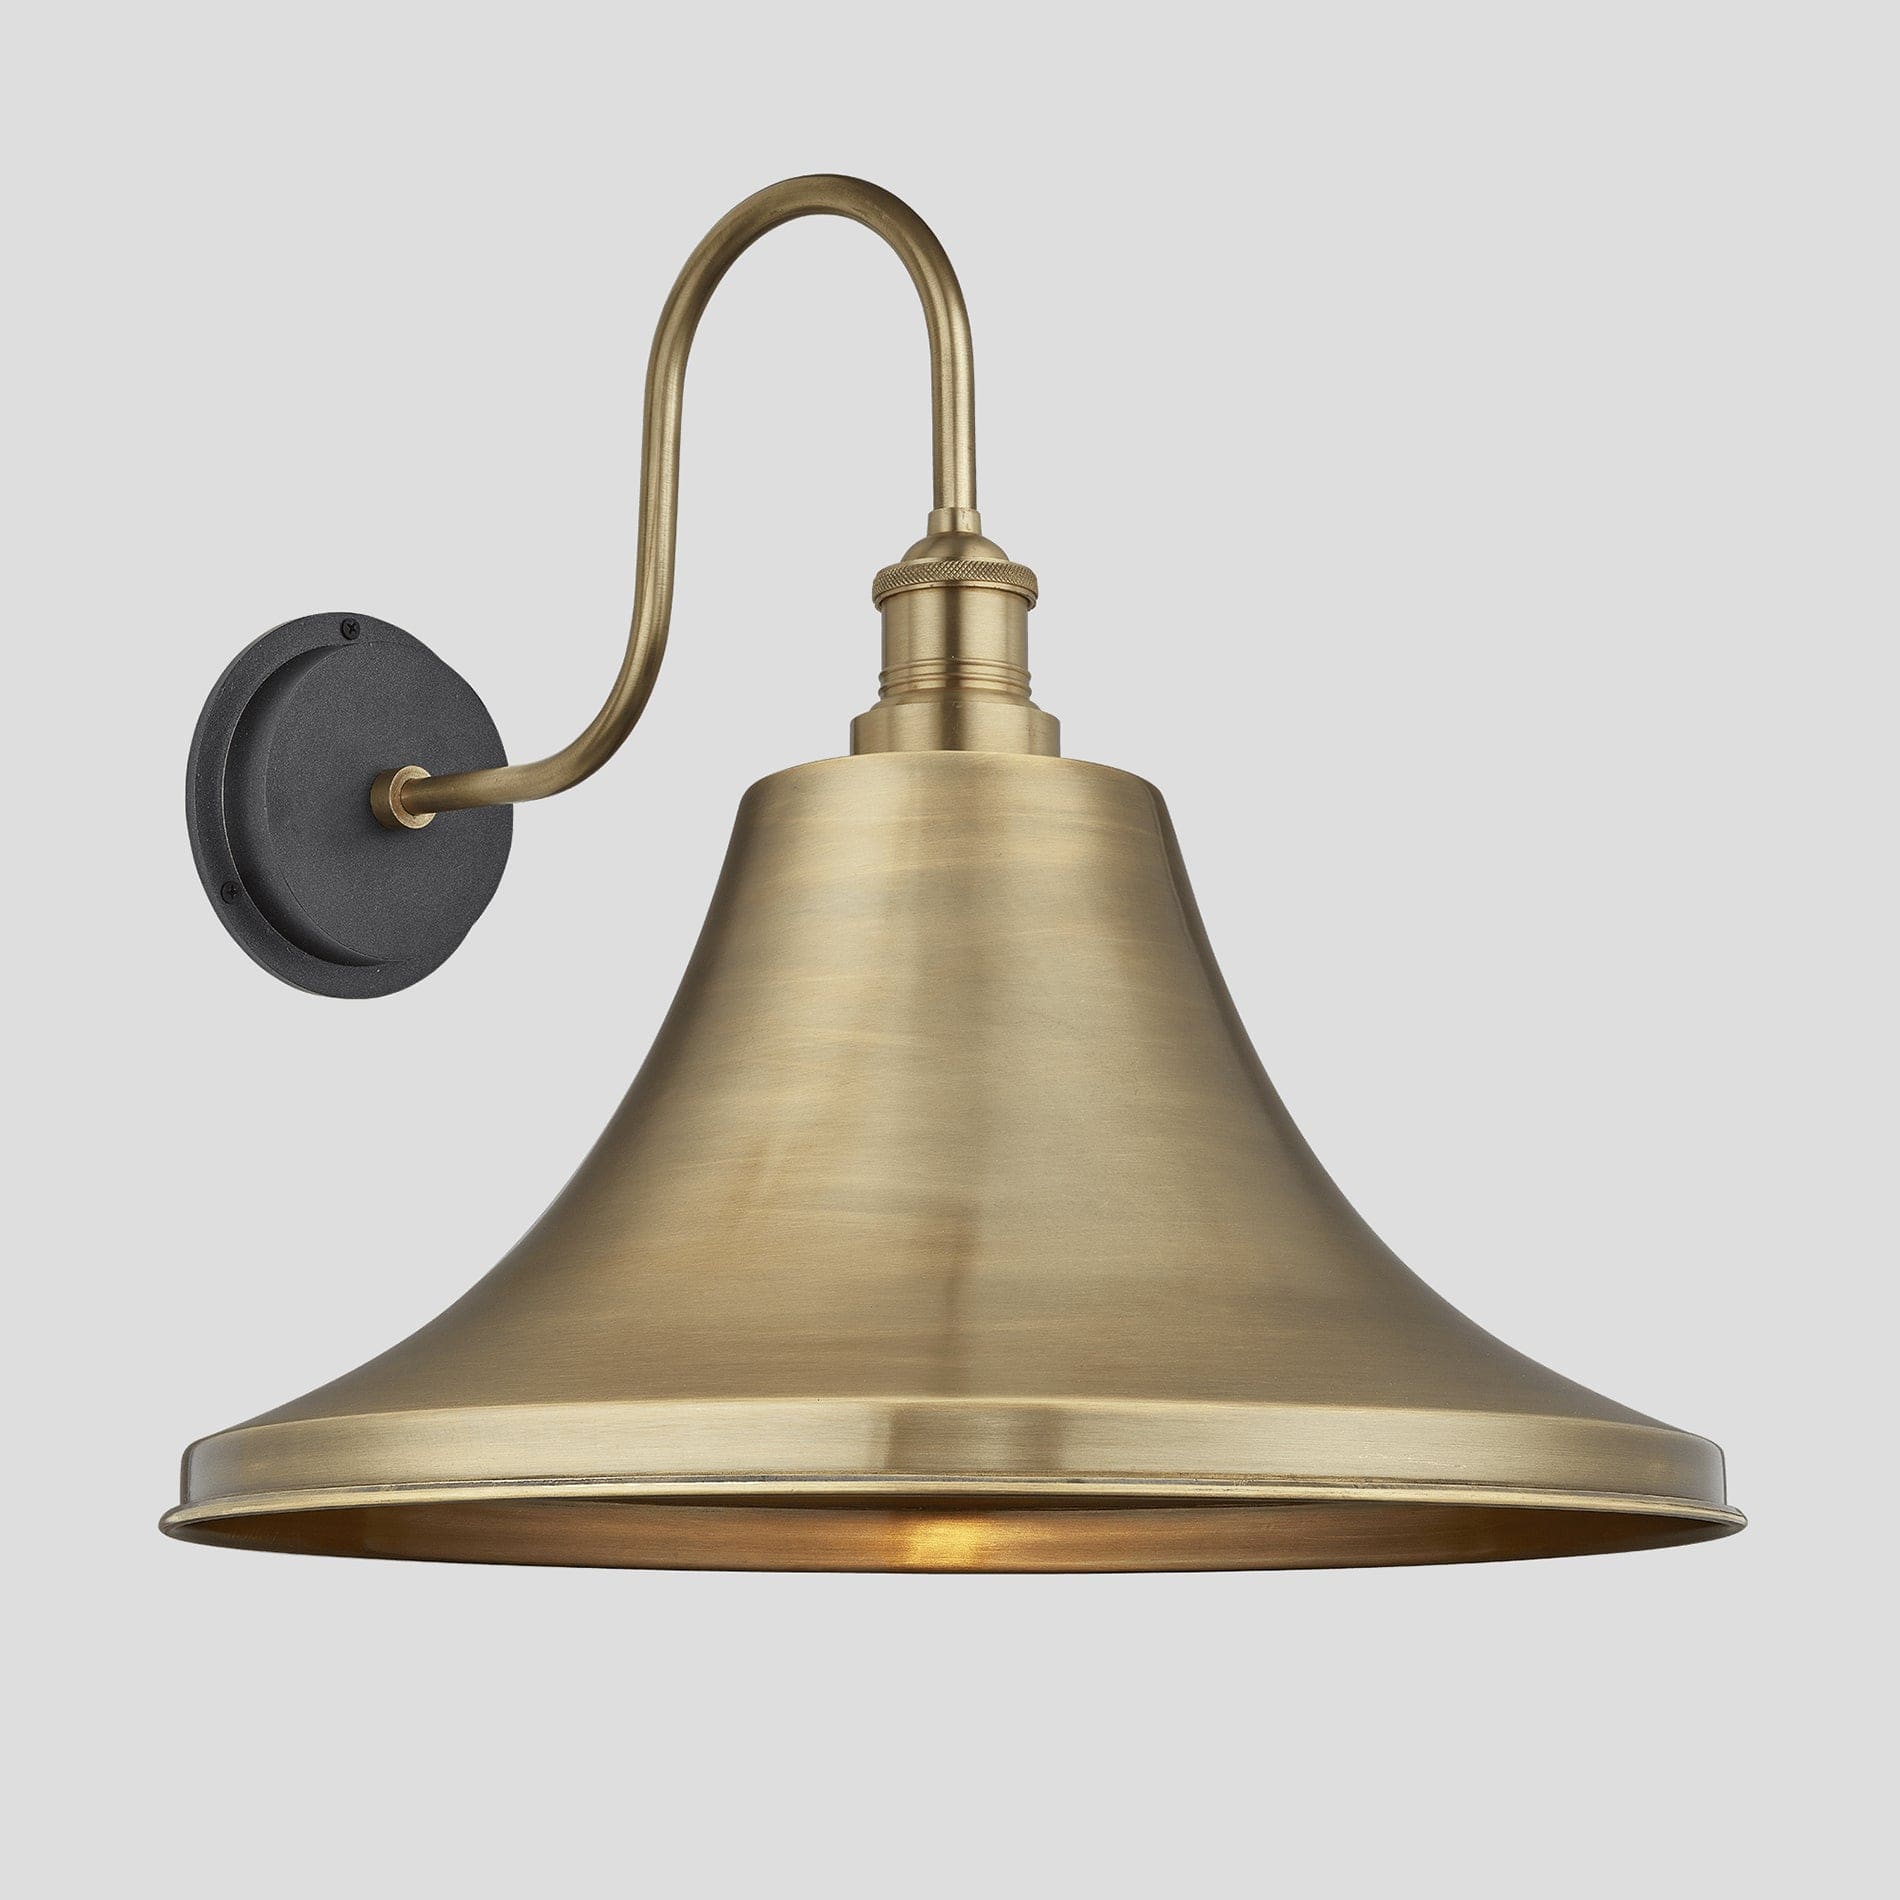 Swan Neck Outdoor & Bathroom Giant Bell Wall Light - 20 Inch – Brass Industville SN-IP65-GBLWL20-B-BH